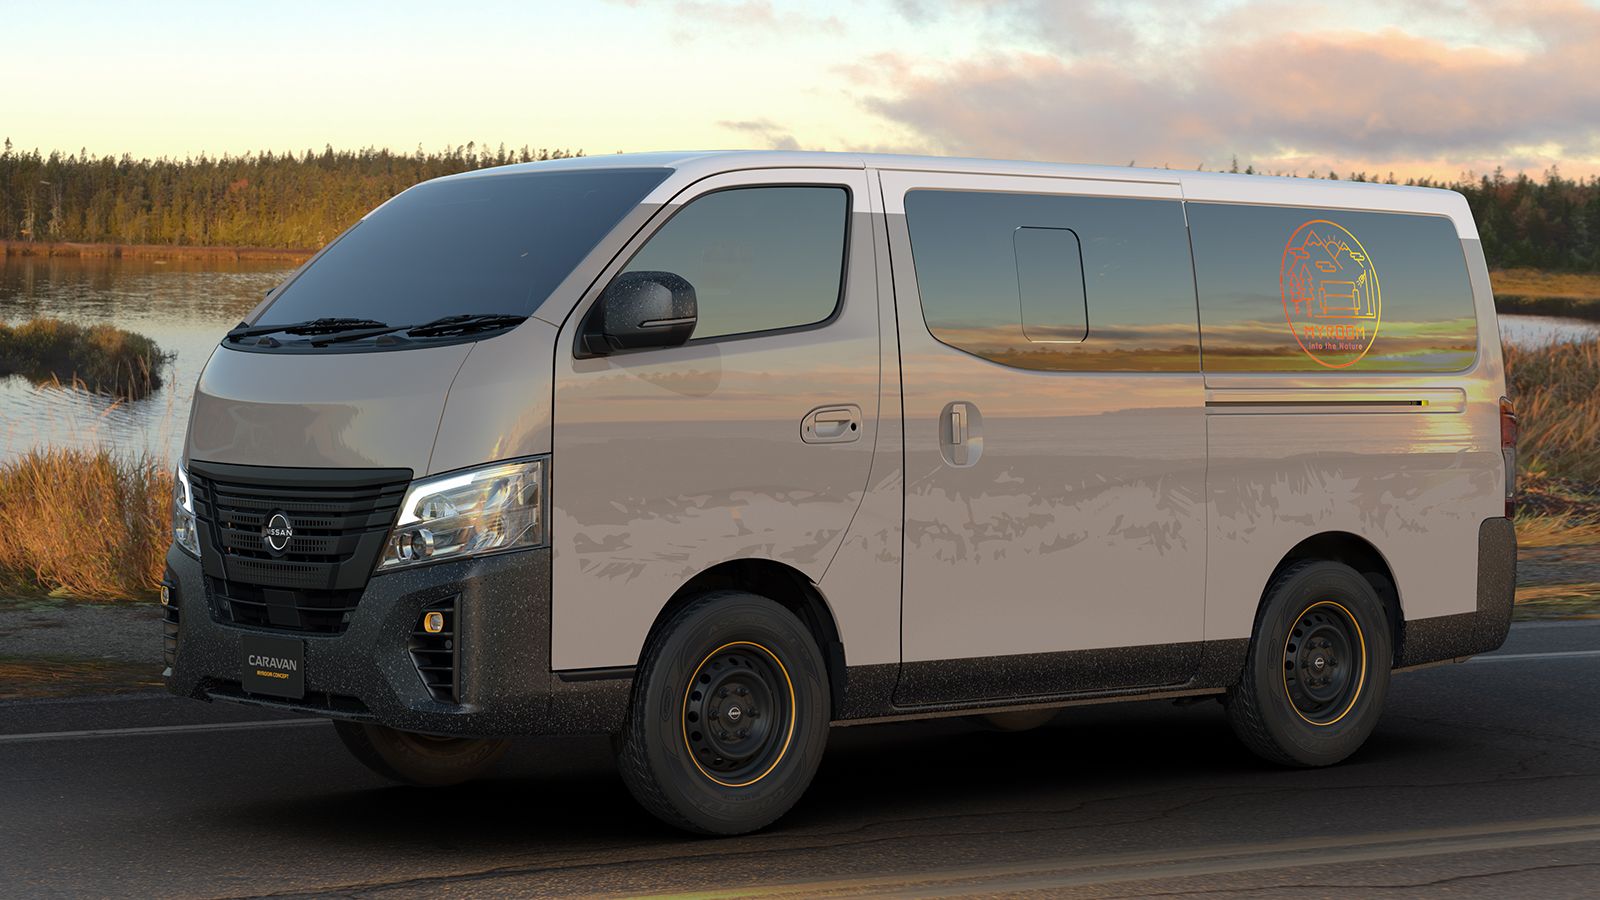 To Caravan Myroom στηρίζεται στην ιαπωνική εκδοχή του Nissan NV350 και αποτελεί ένα concept που σχεδιάστηκε ώστε να αποτελεί το απόλυτο μέρος χαλάρωσης.